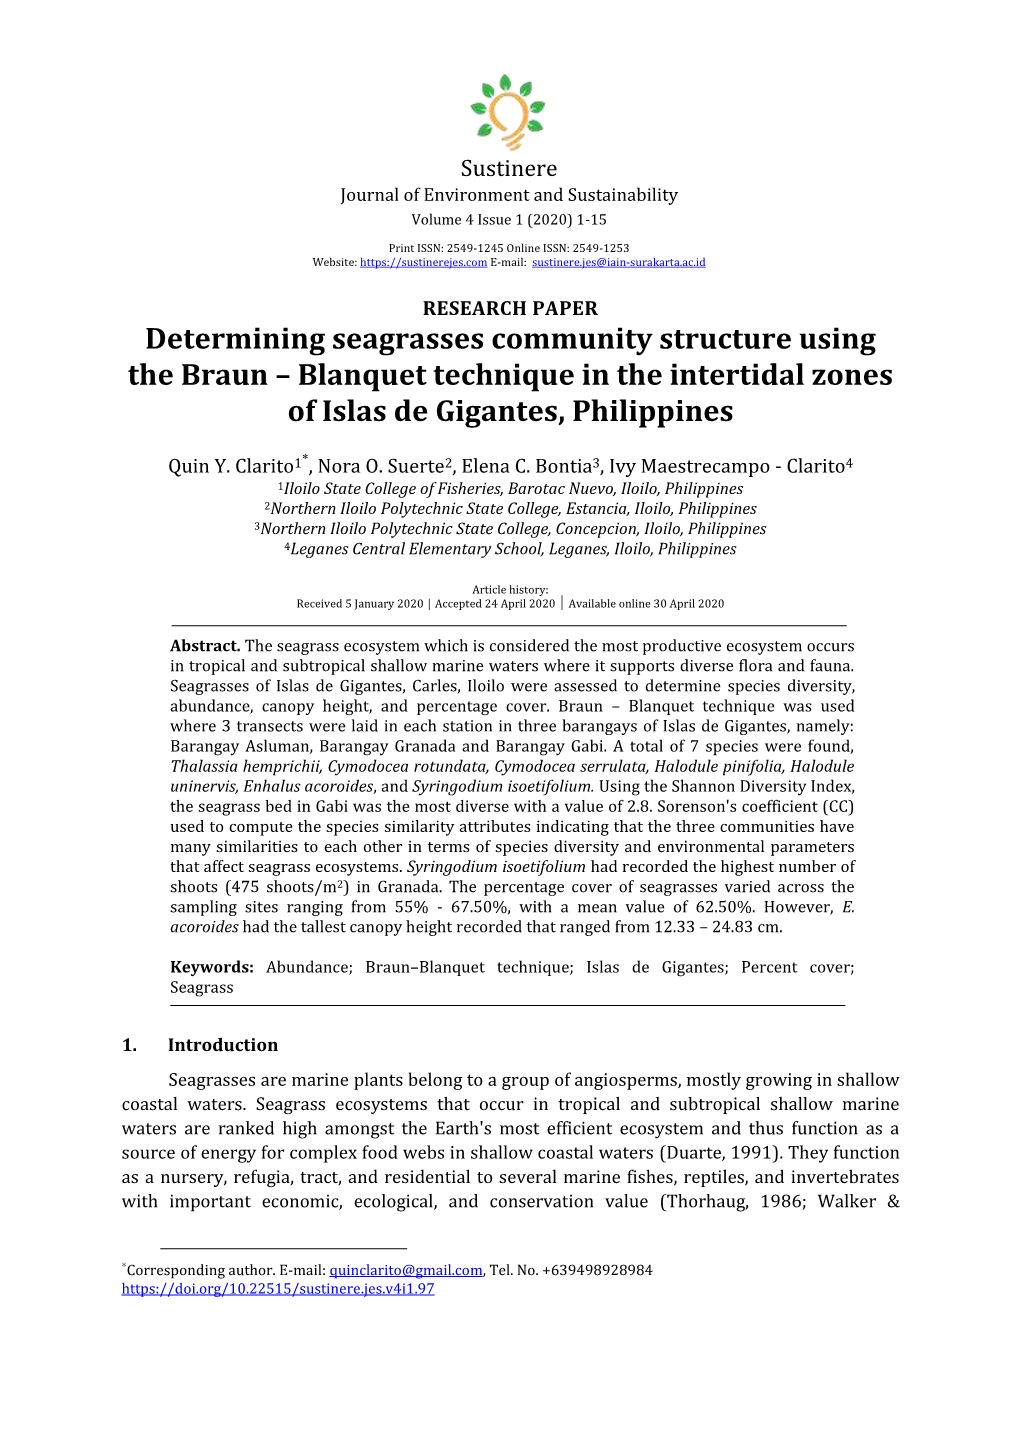 Determining Seagrasses Community Structure Using the Braun – Blanquet Technique in the Intertidal Zones of Islas De Gigantes, Philippines